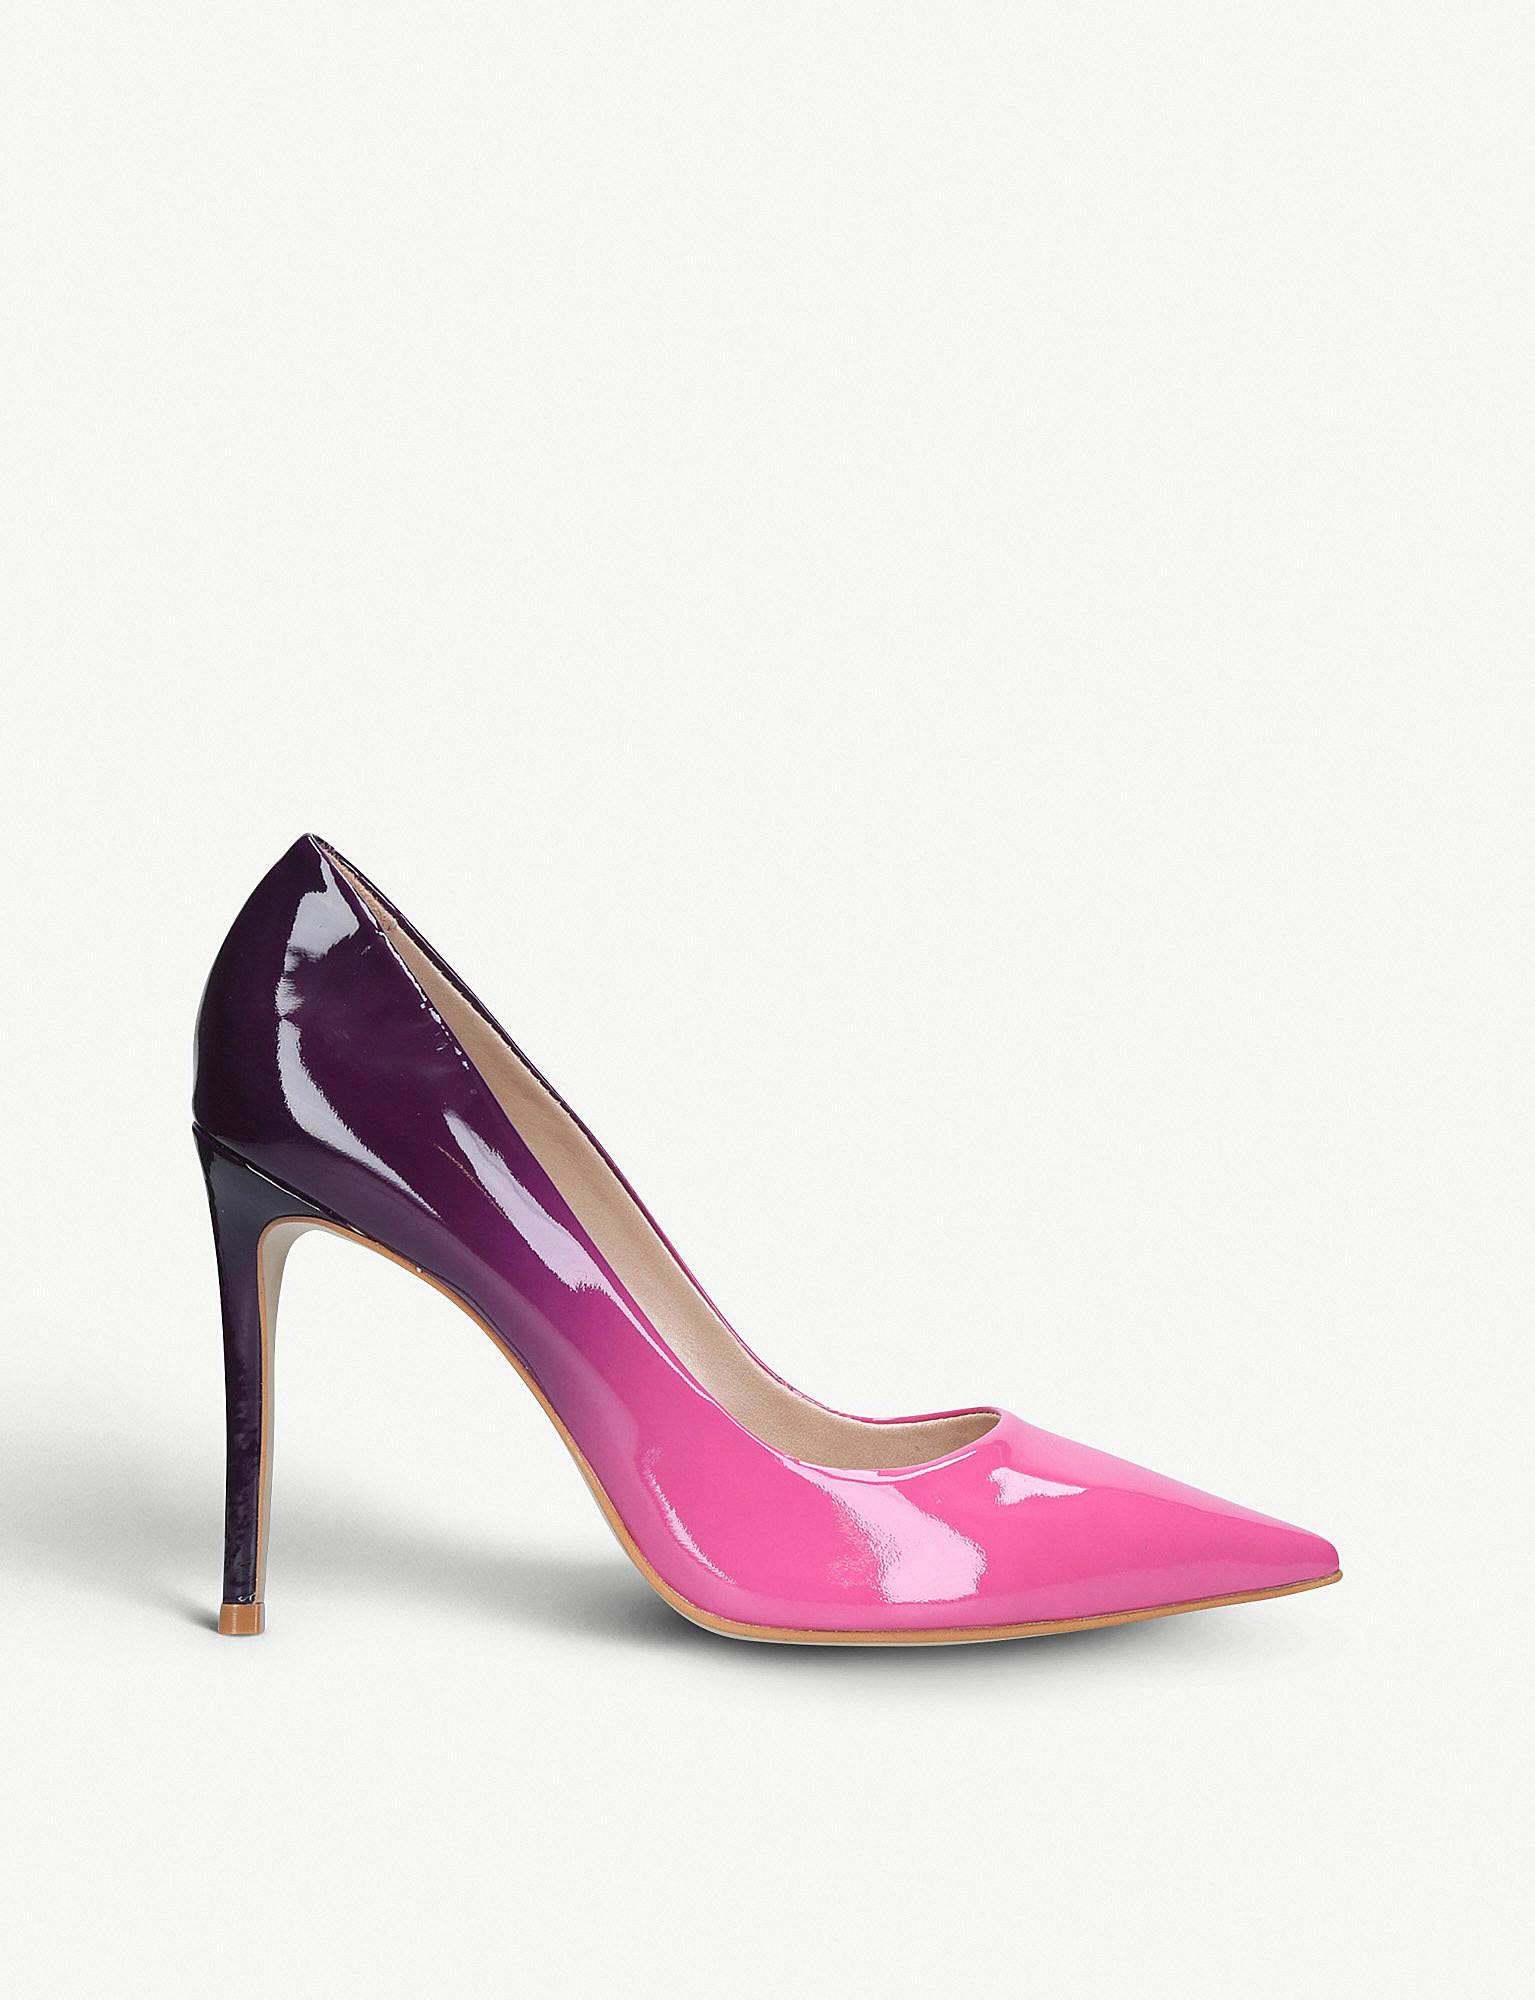 Lyst - Carvela Kurt Geiger Purple 'alice 2' High Heel Court Shoes in Purple